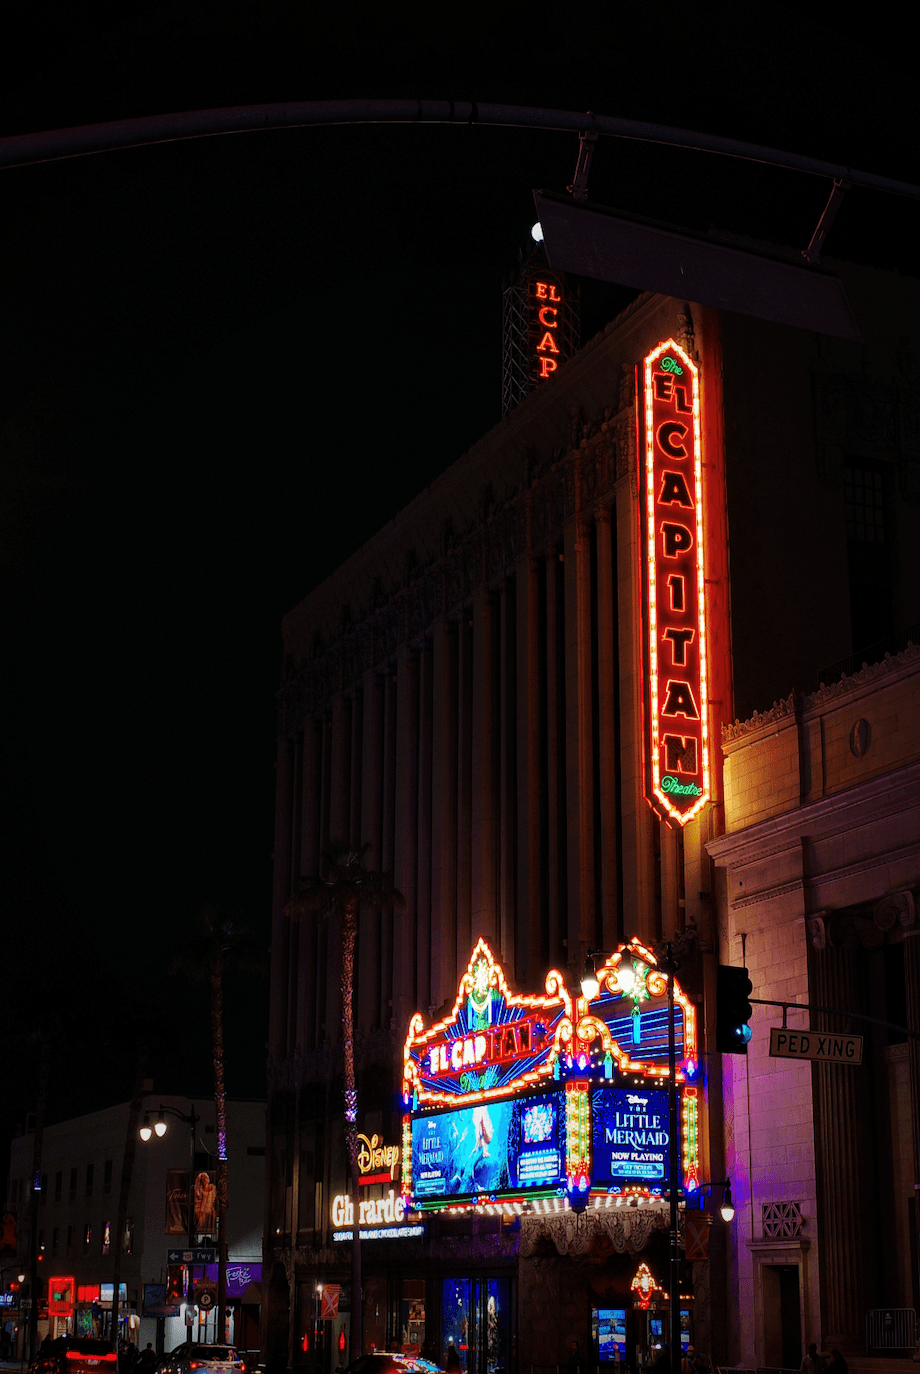 好萊塢星光大道Walk of Fame
中國劇院TCL Chinese Theatre
好萊塢高地中心（Hollywood & Highland Center）